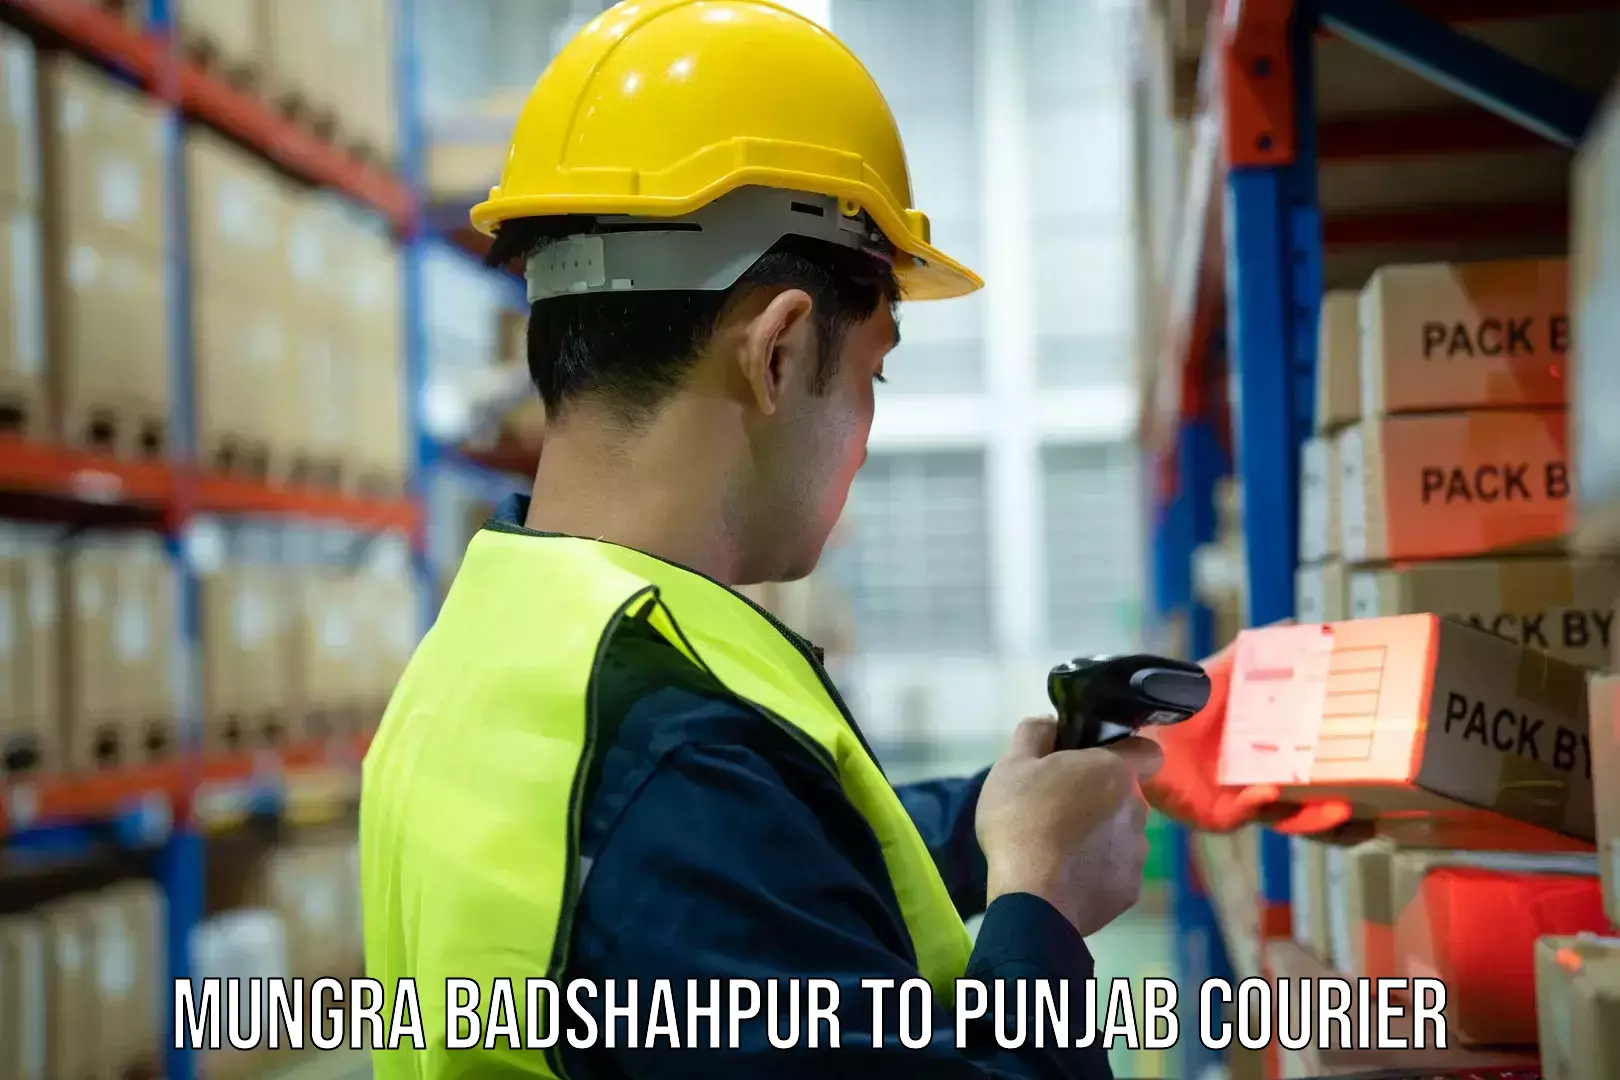 Nationwide delivery network Mungra Badshahpur to Anandpur Sahib